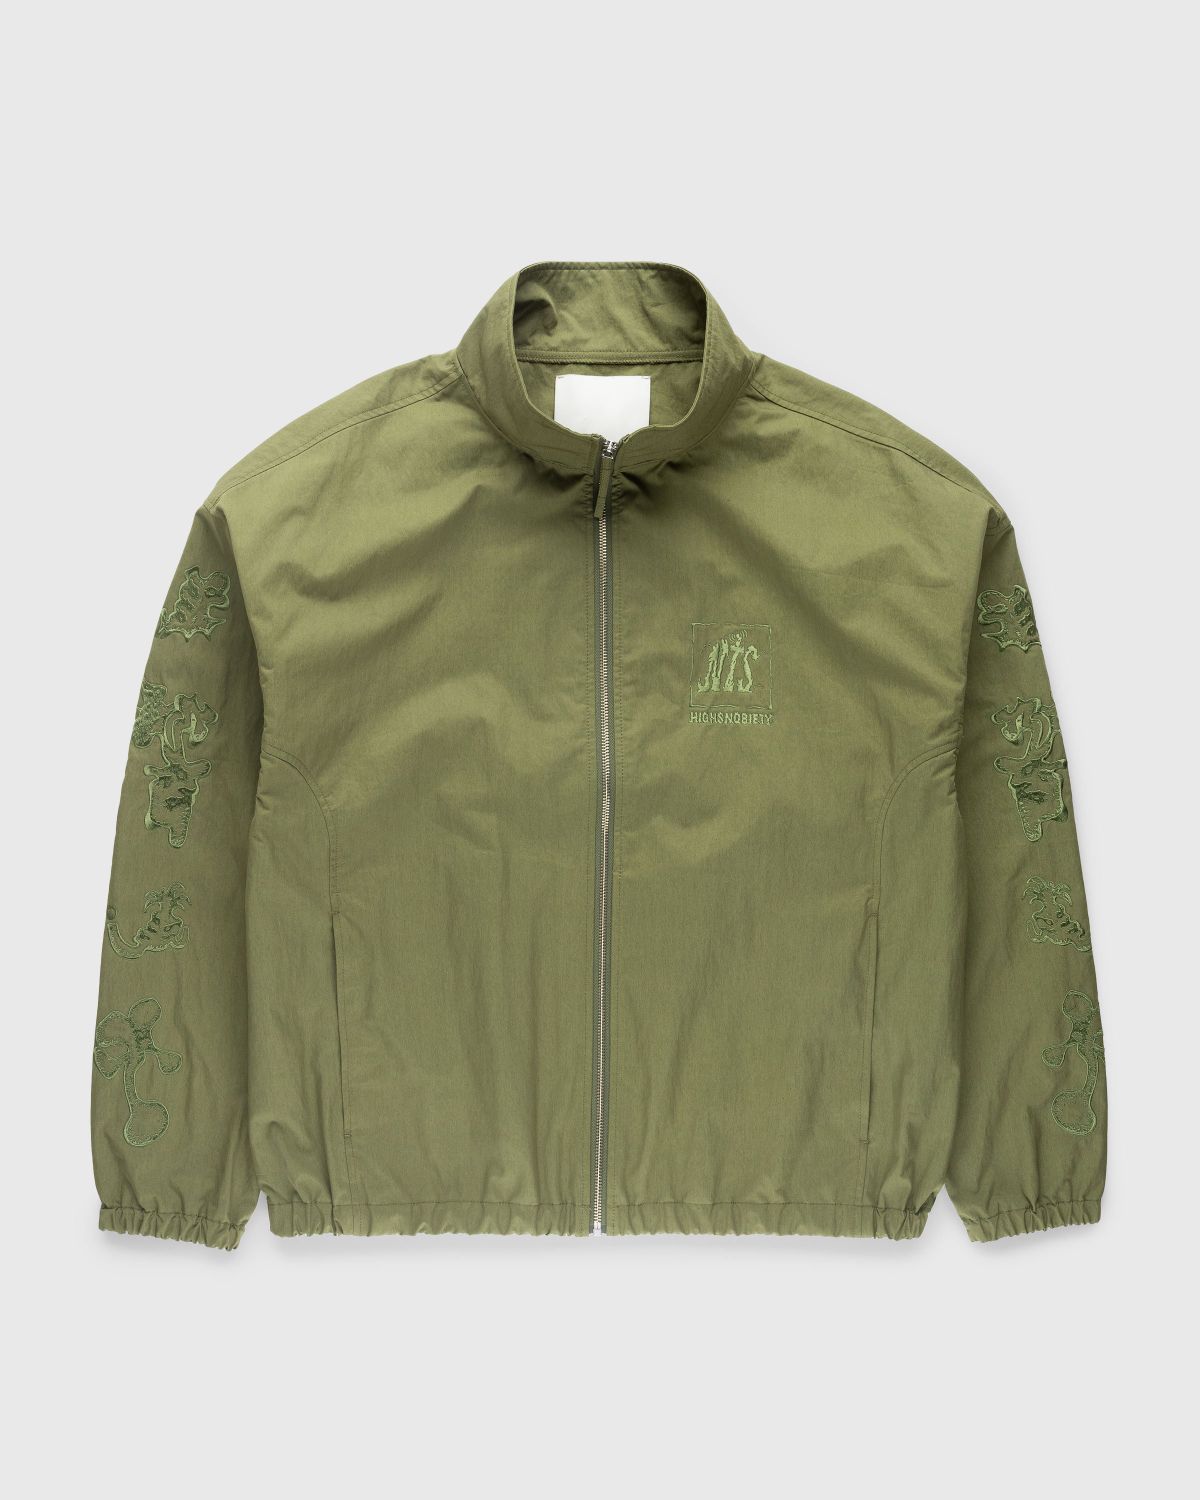 NTS x Highsnobiety – Brushed Nylon Track Jacket Green - Outerwear - Green - Image 1